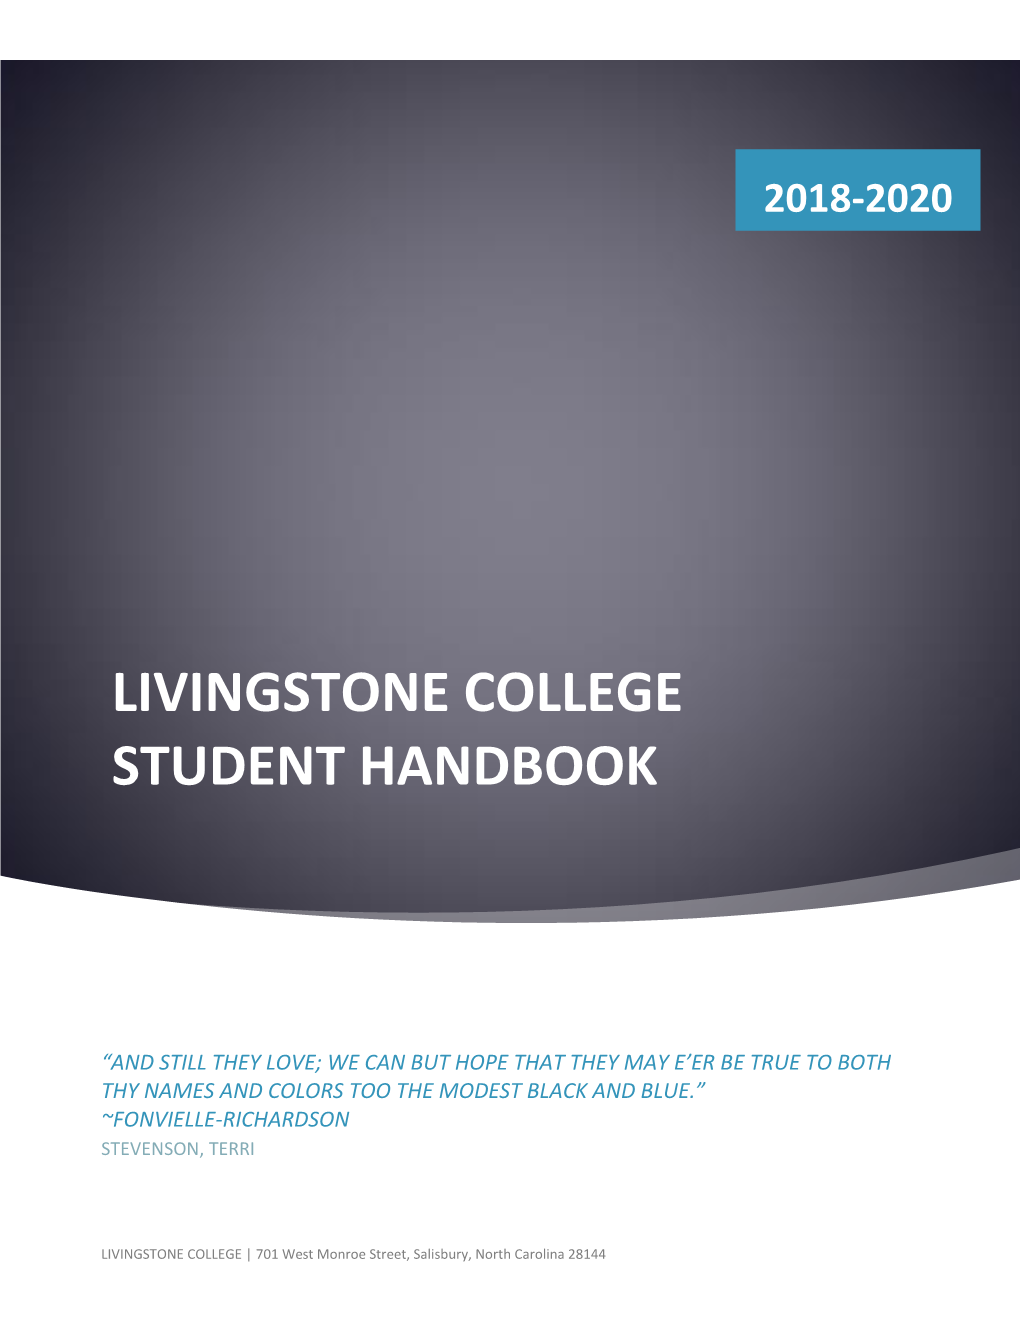 Livingstone College Student Handbook